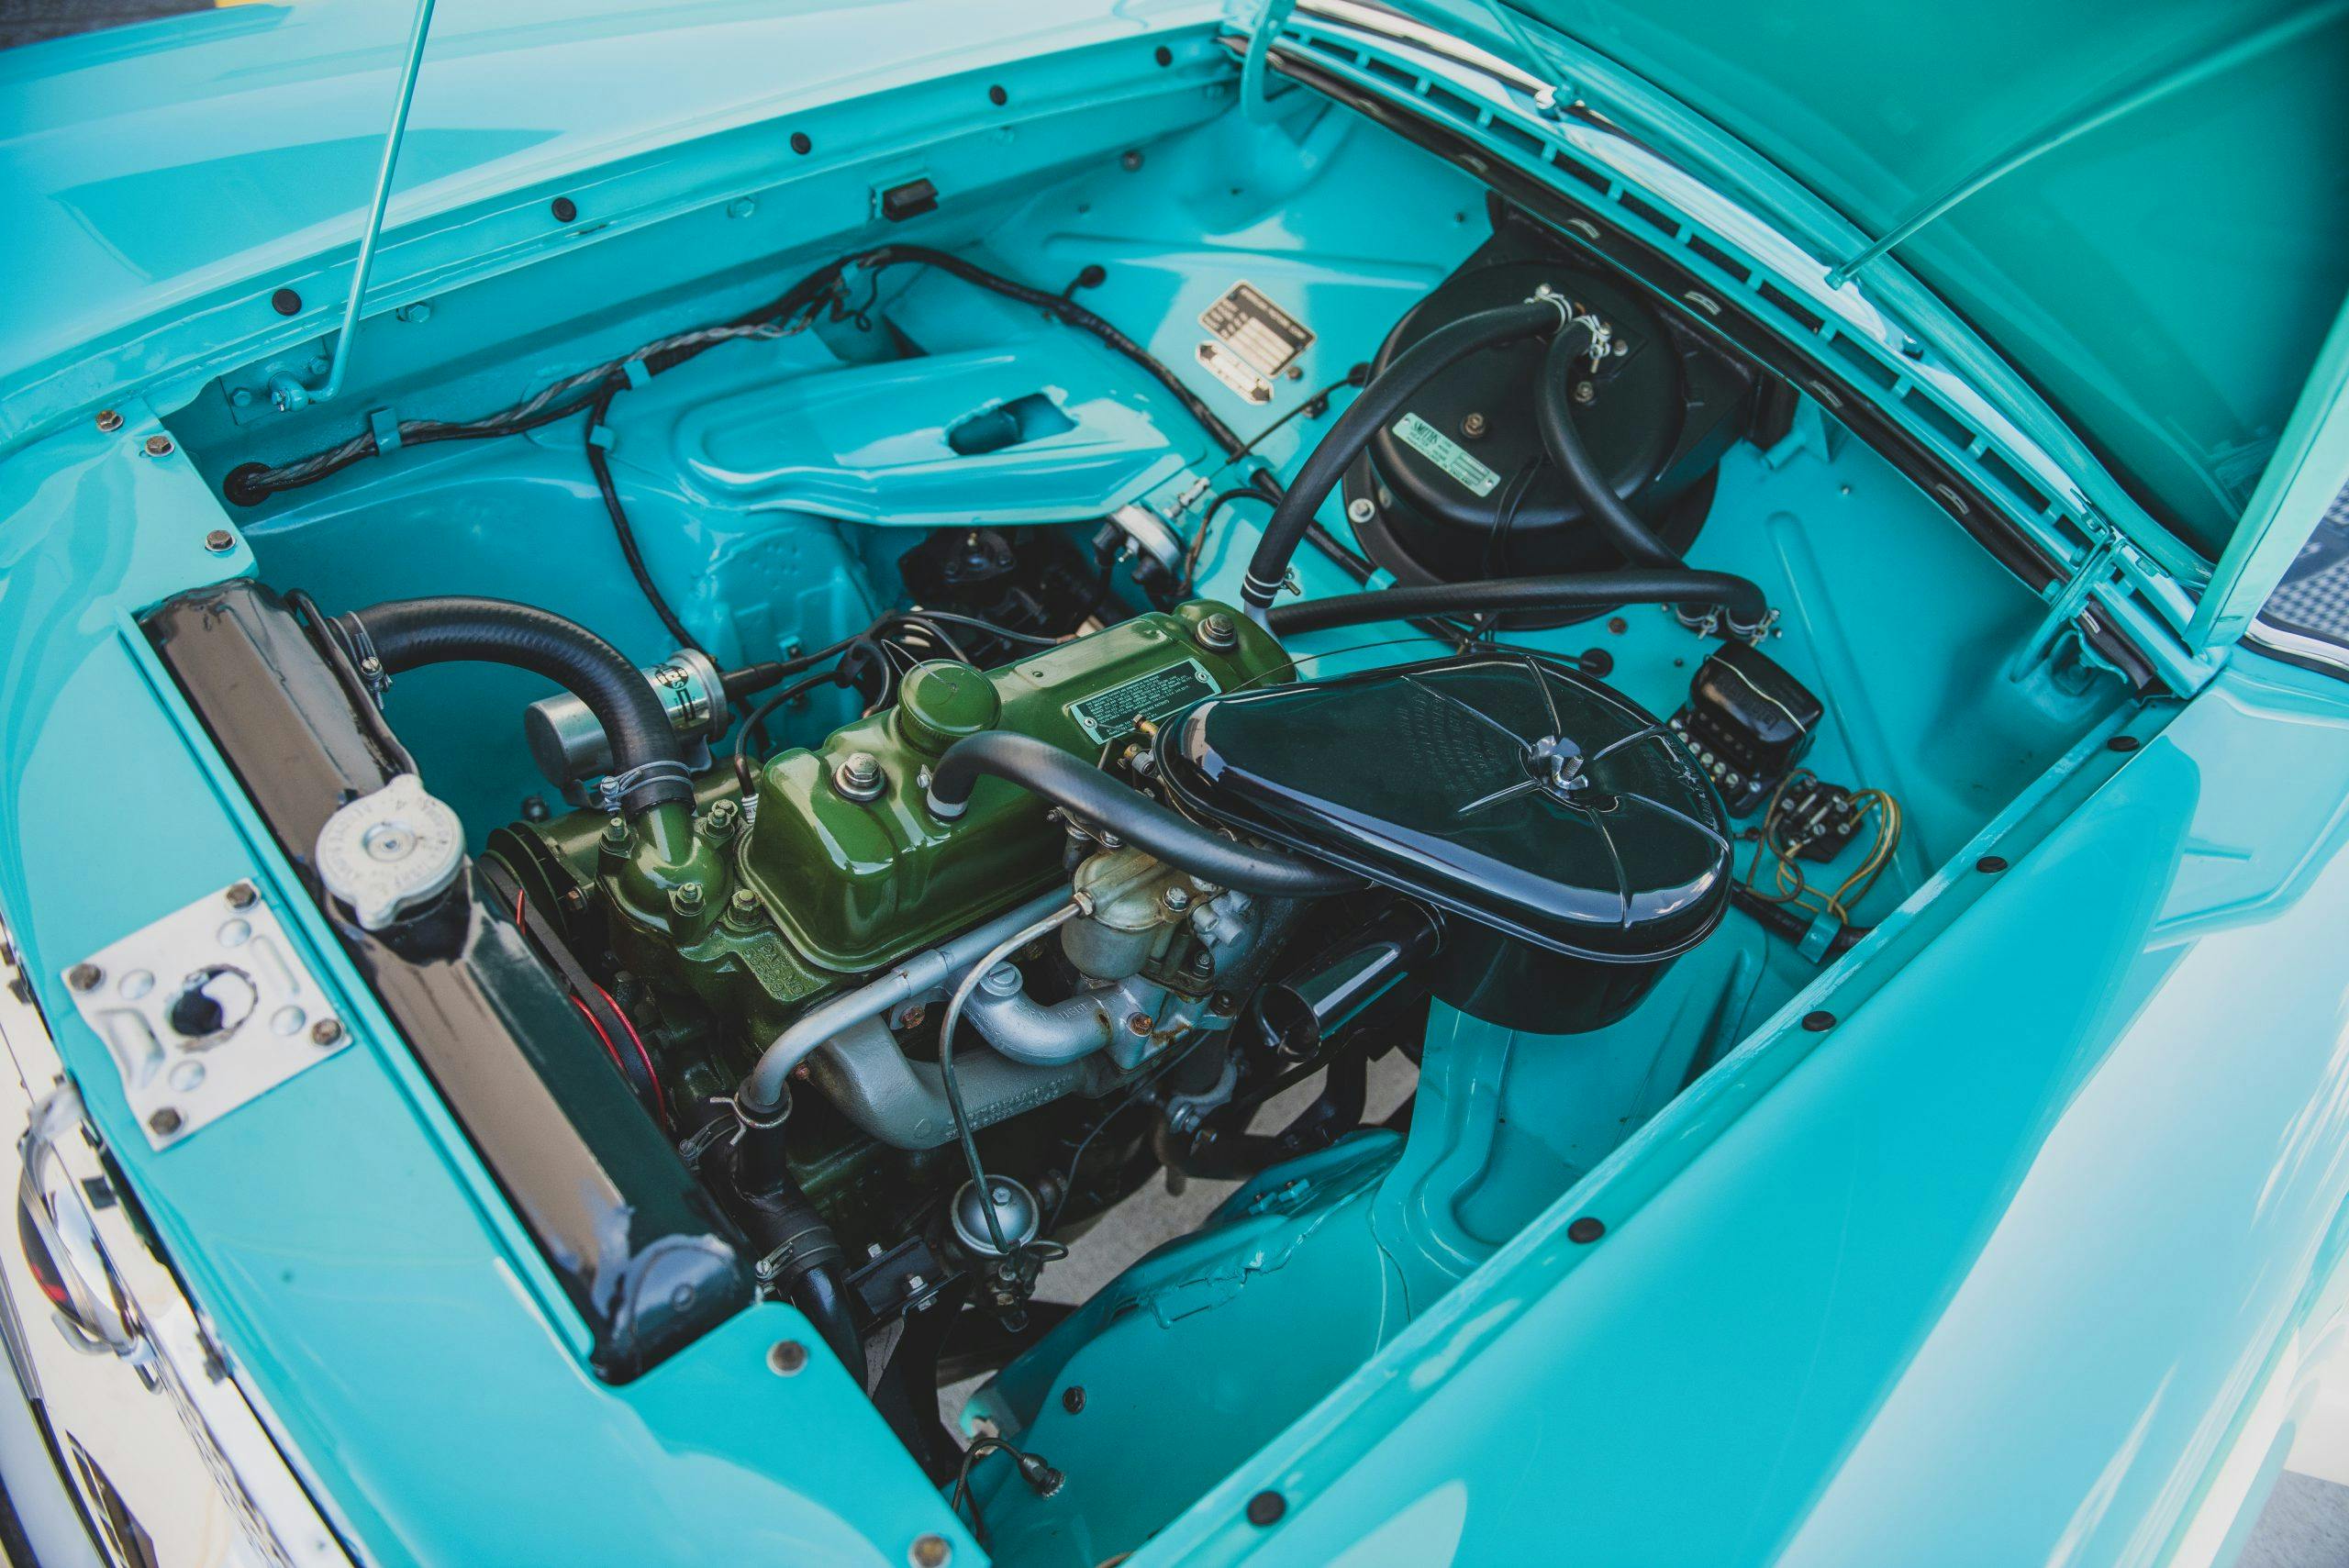 1957 Nash Metropolitan engine